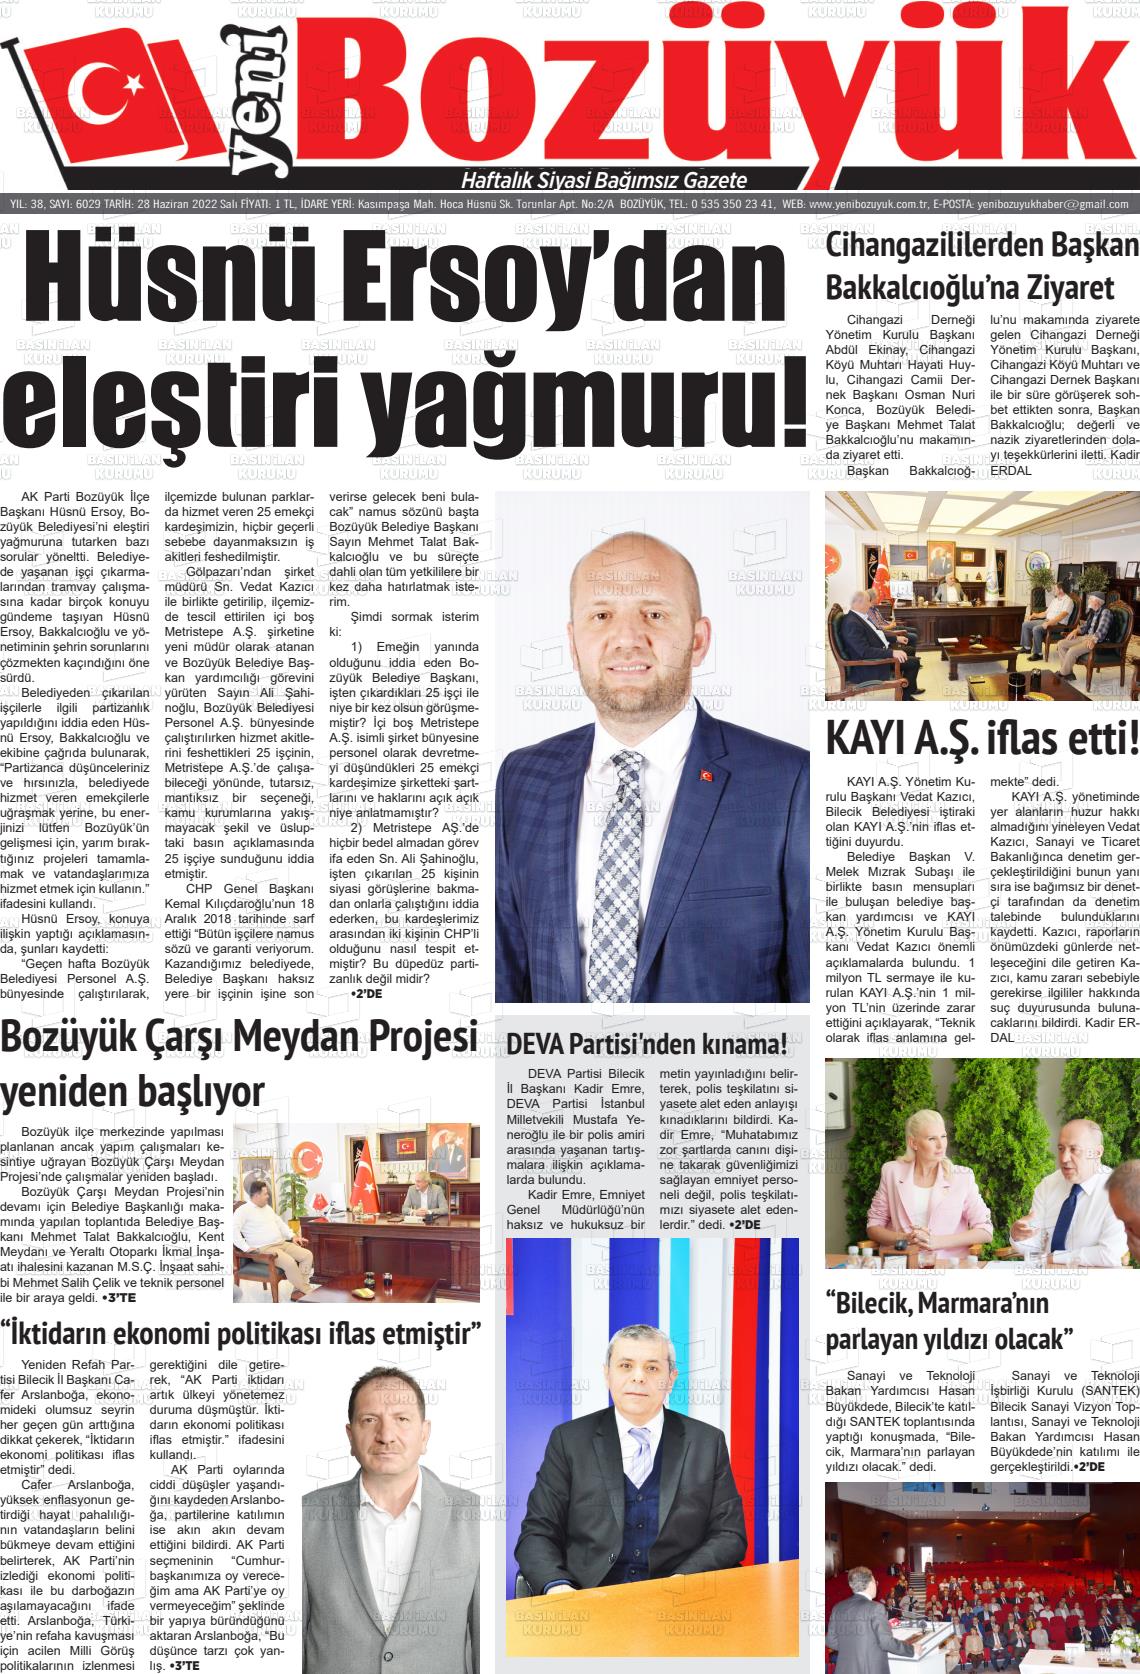 28 Haziran 2022 Yeni Bozüyük Gazete Manşeti